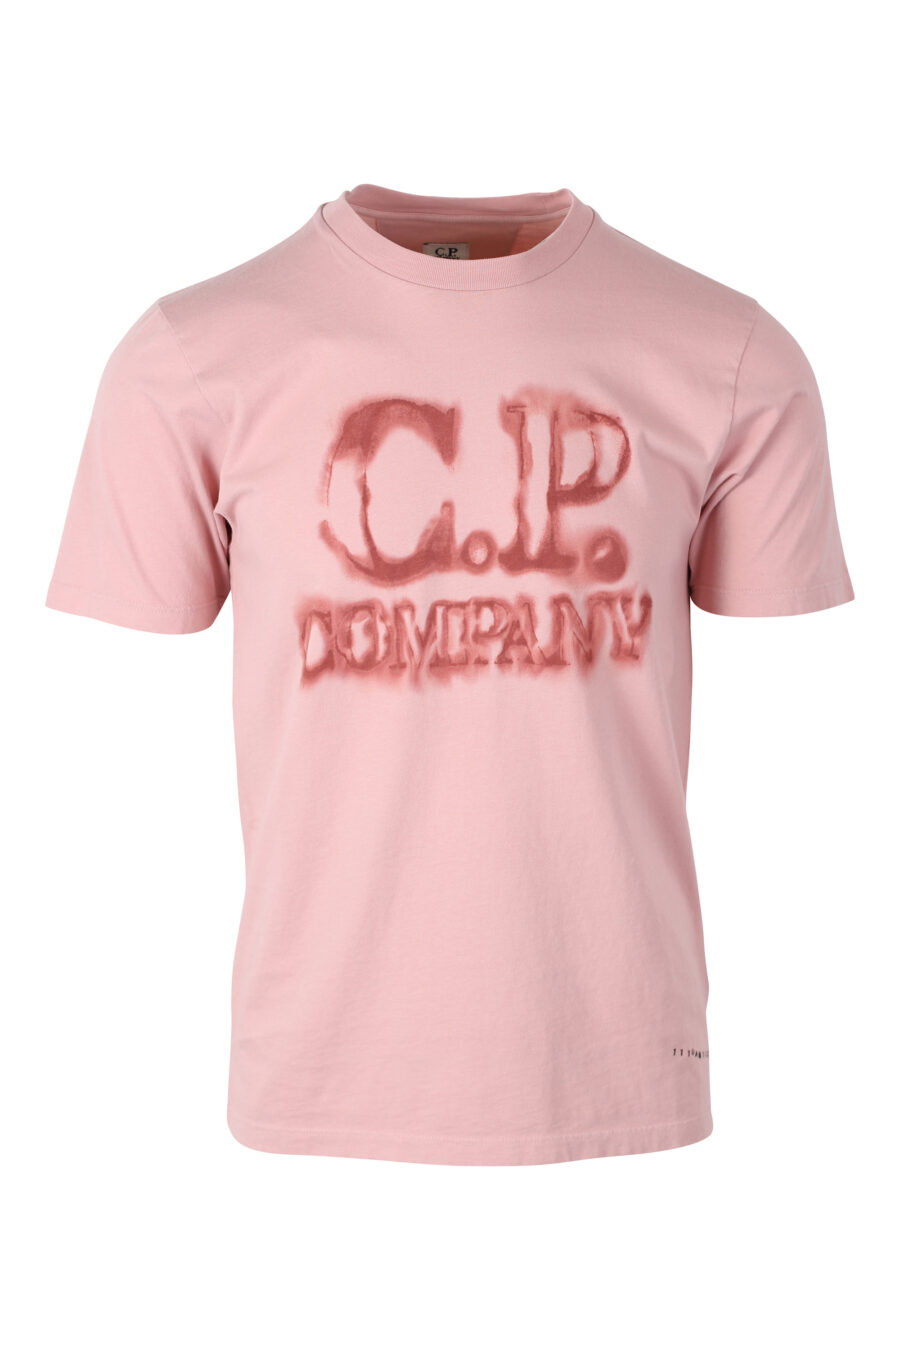 Camiseta rosa con maxilogo "spray" - IMG 2401